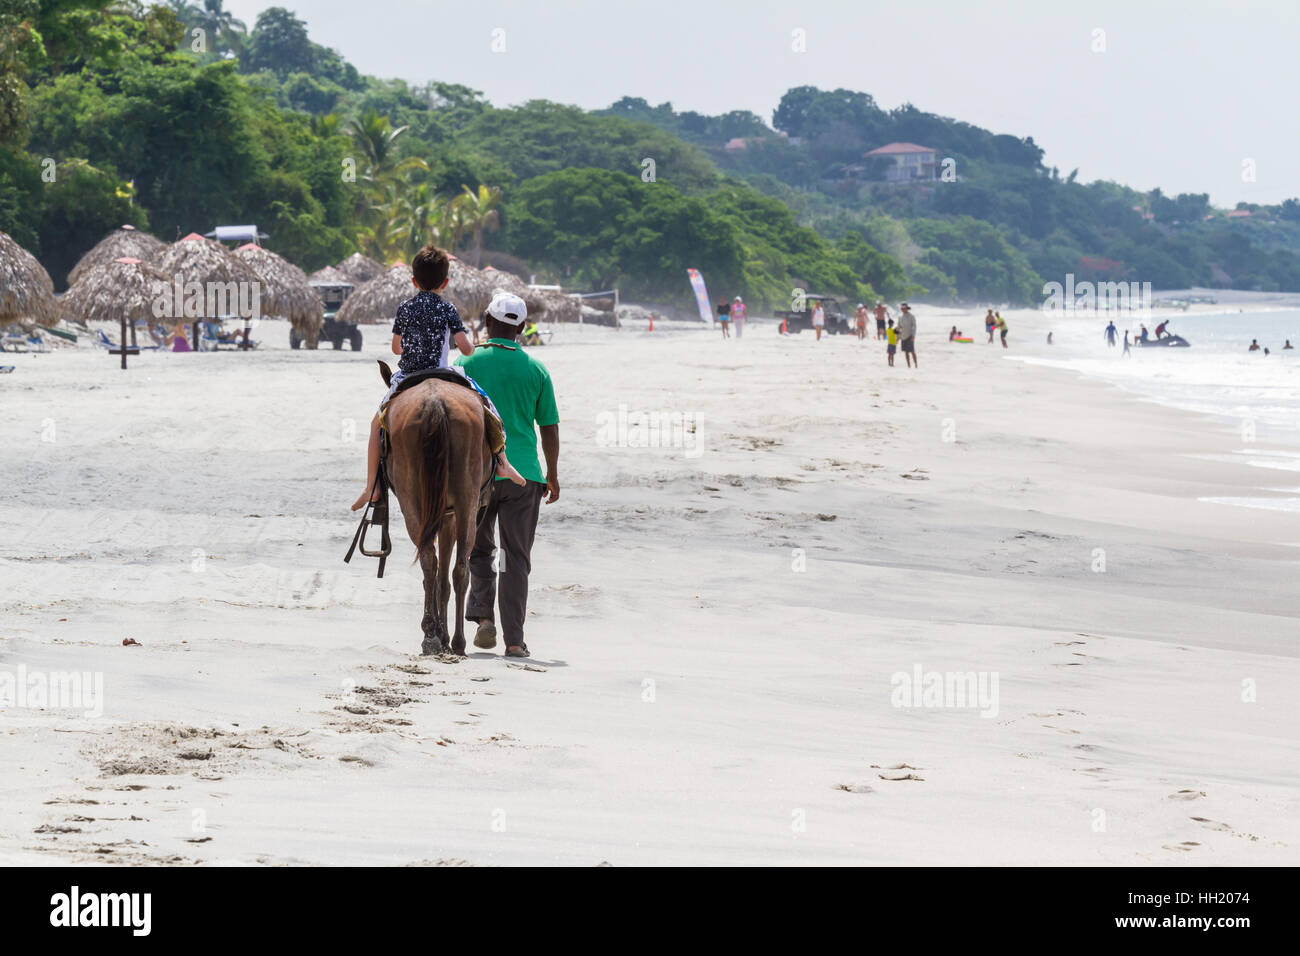 Santa Clara, Panama - 12 Juni: junge auf einem Pferd Reiten am Strand entlang in Panama. 12. Juni 2016, Santa Clara, Panama. Stockfoto